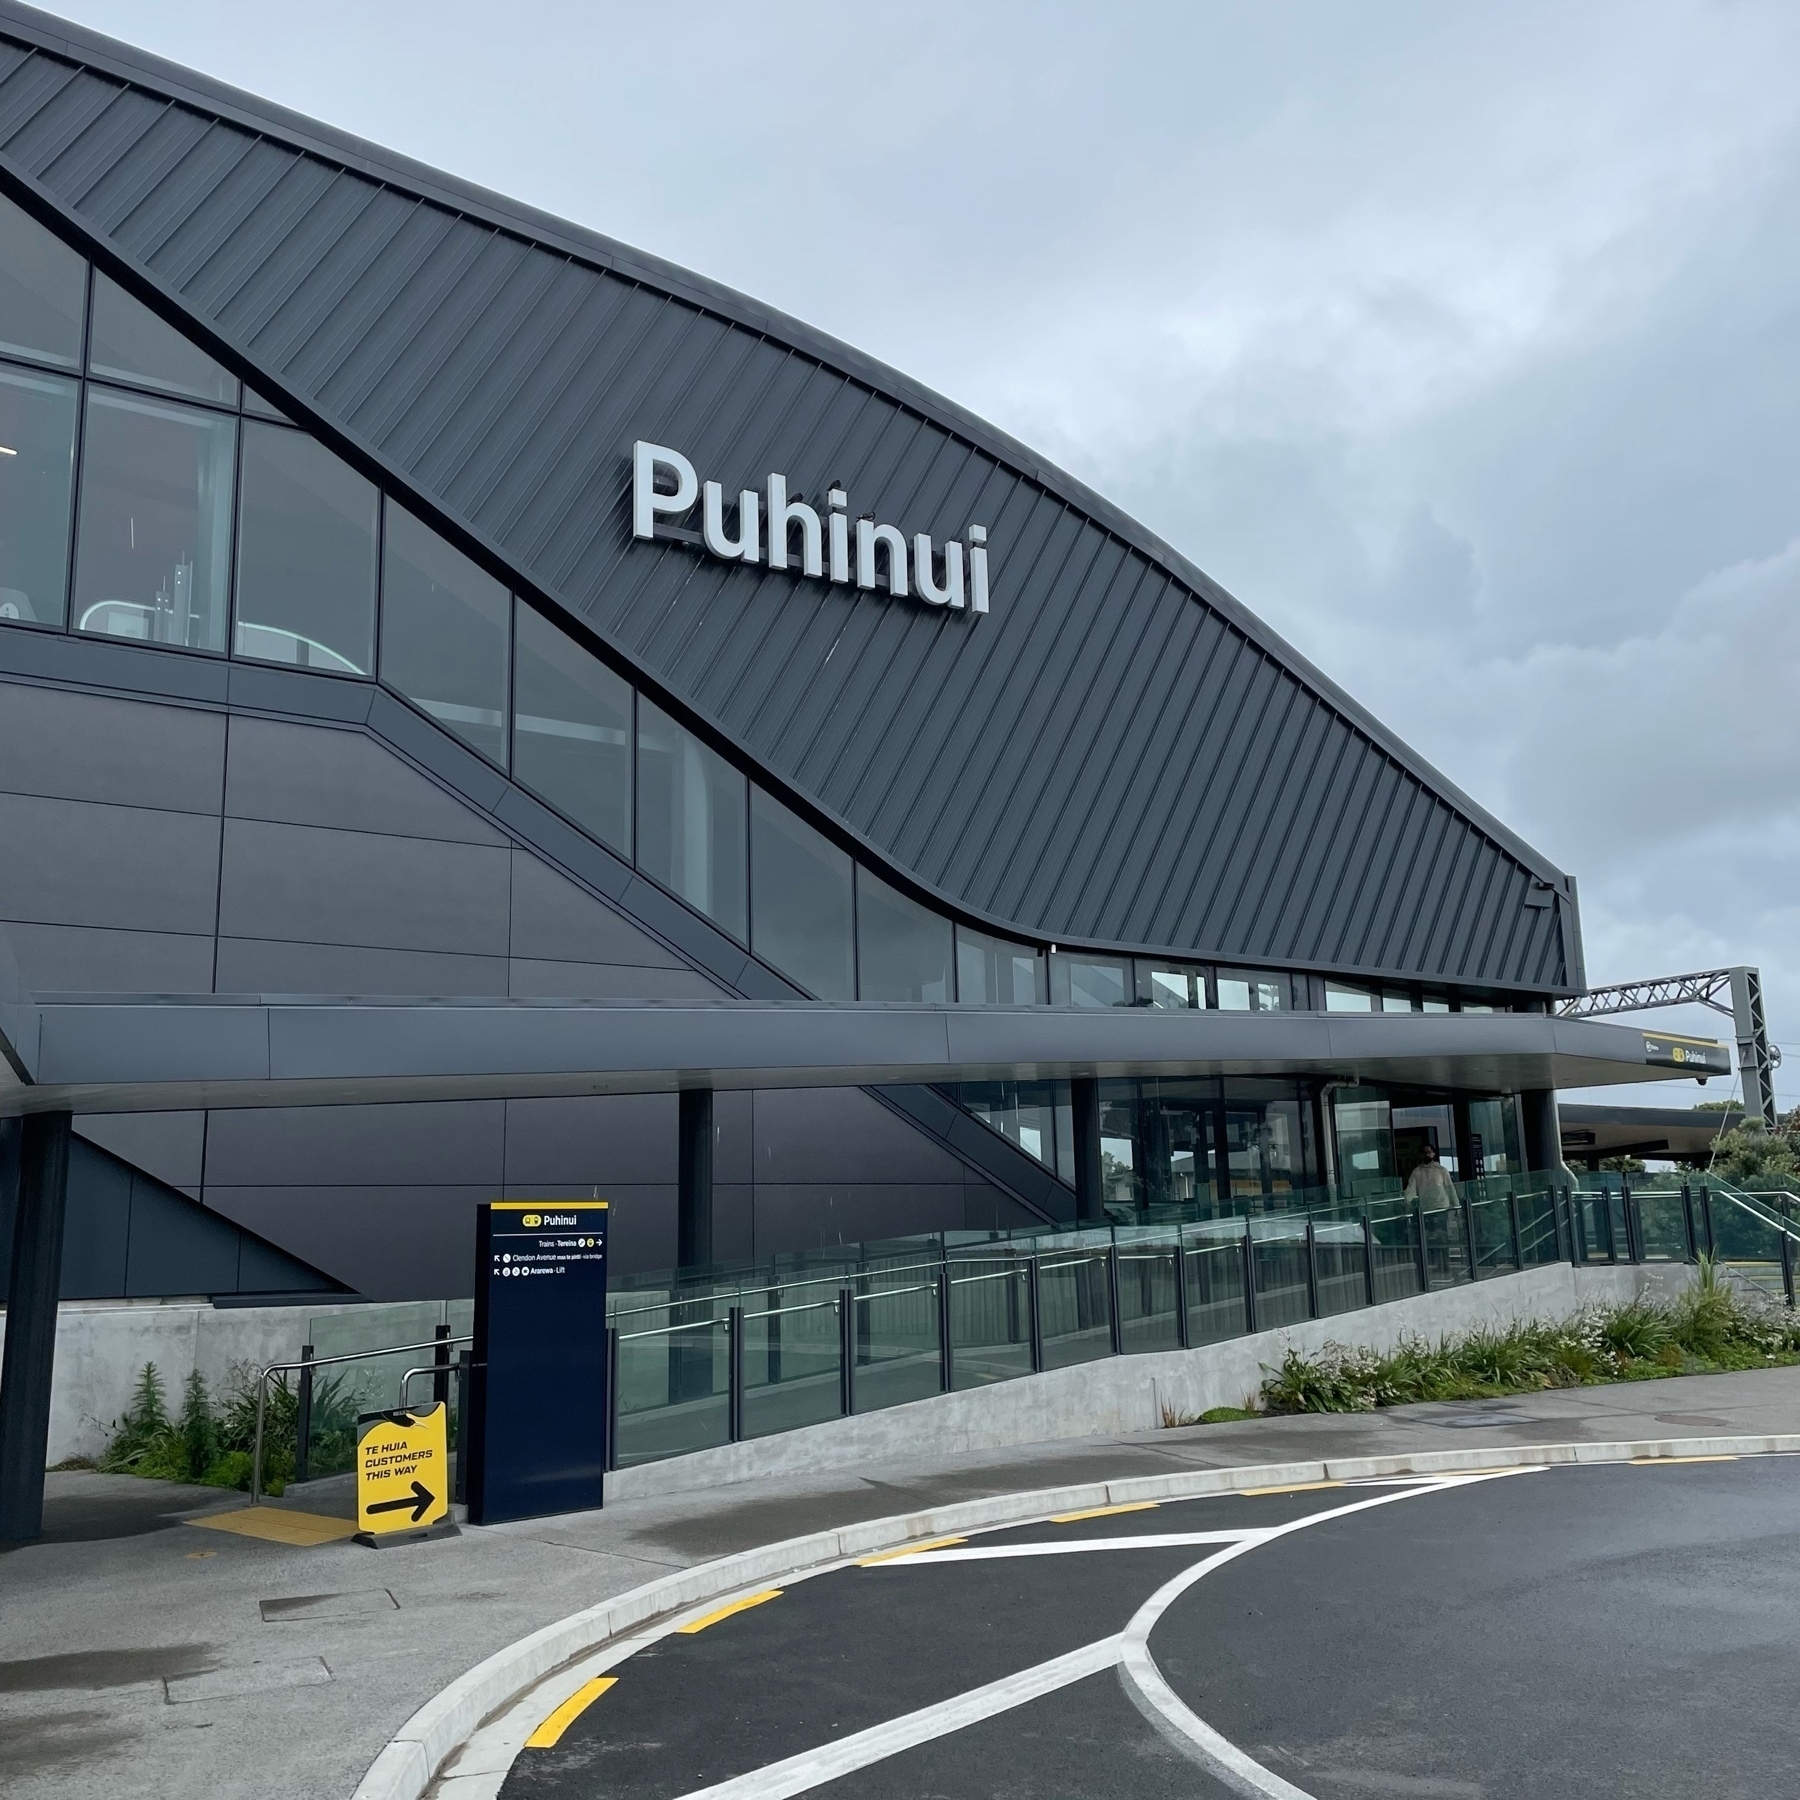 Brand new futuristic Puhinui station